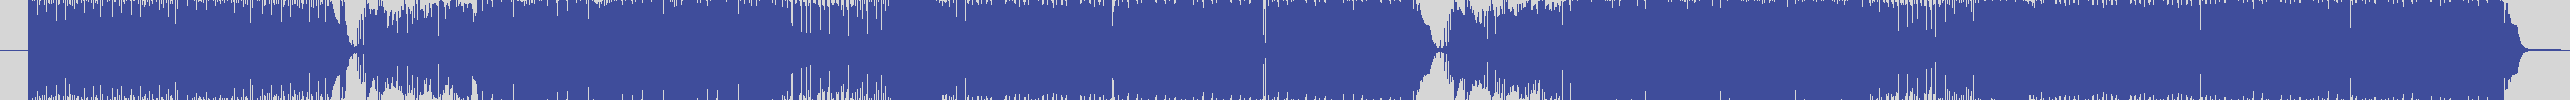 atomic_recordings [AR005] Giulio Lanteri - Ritmo Do Brazil [Original Mix] audio wave form